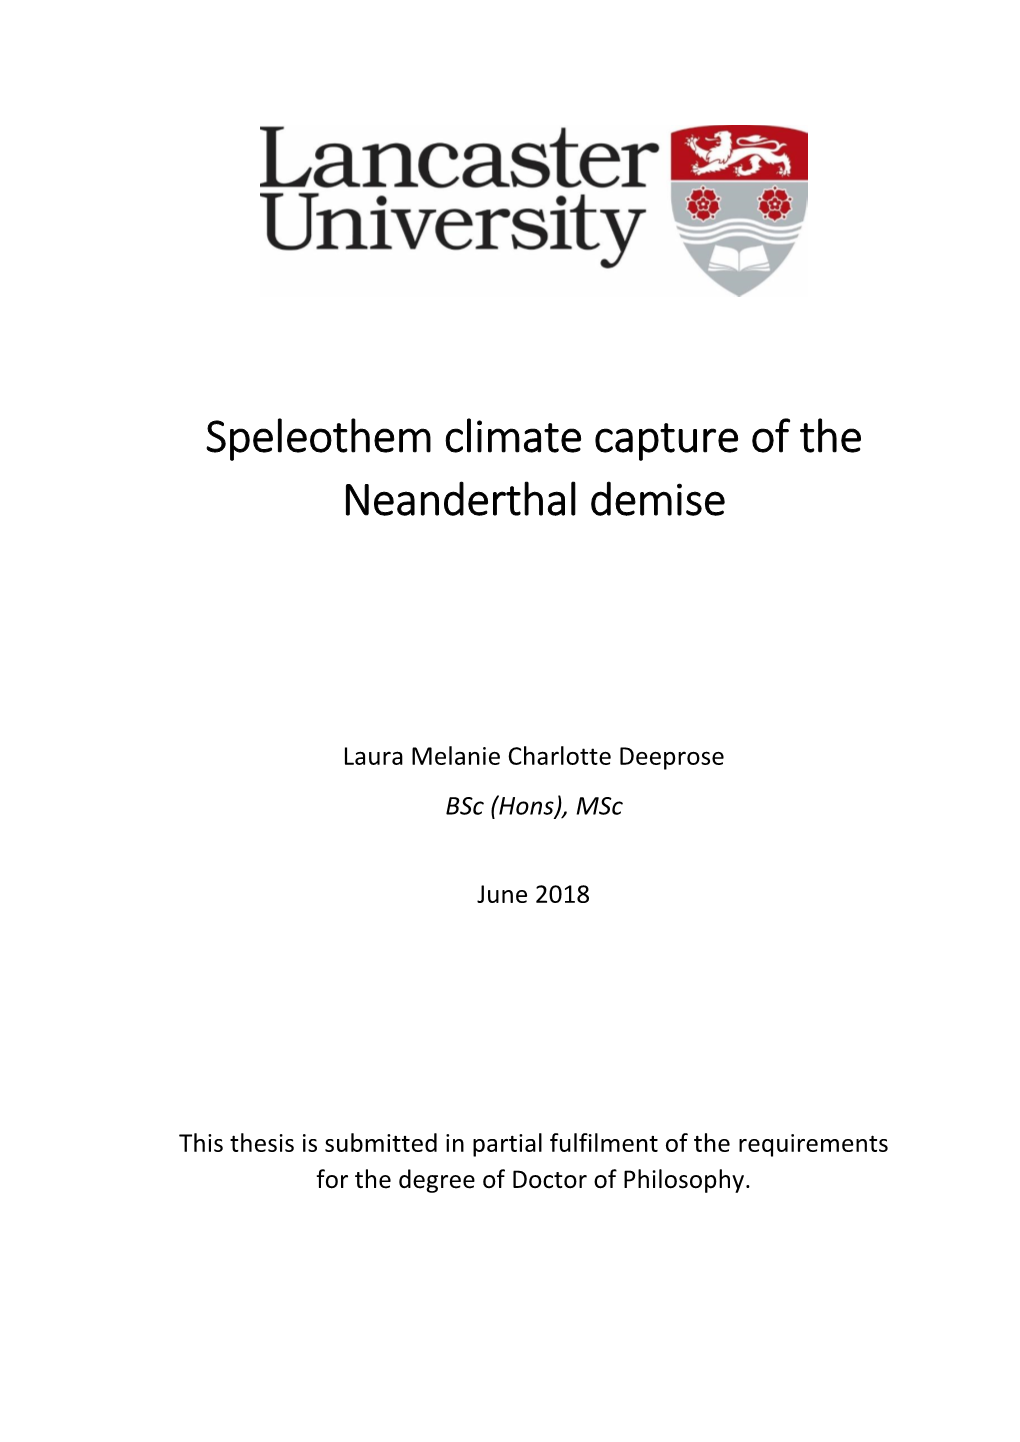 Speleothem Climate Capture of the Neanderthal Demise